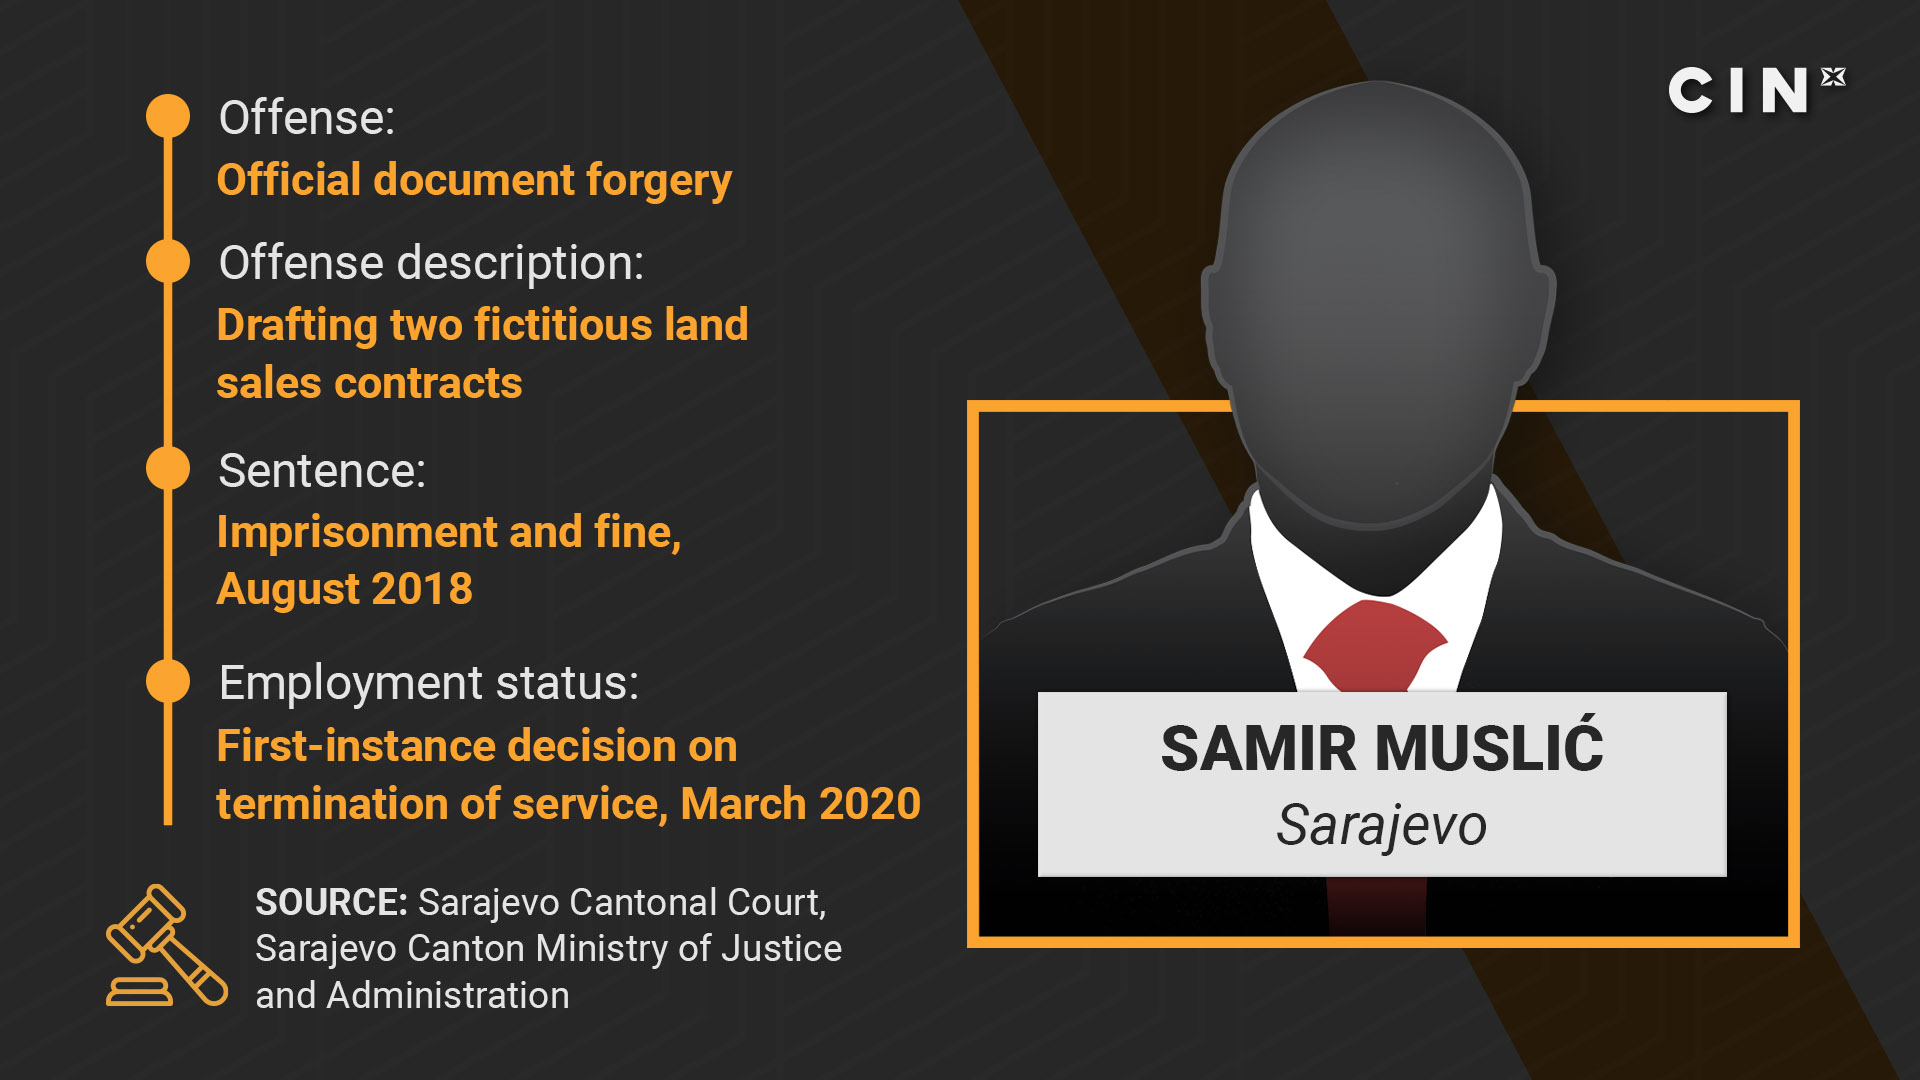 Profili - Samir Muslić - ENG